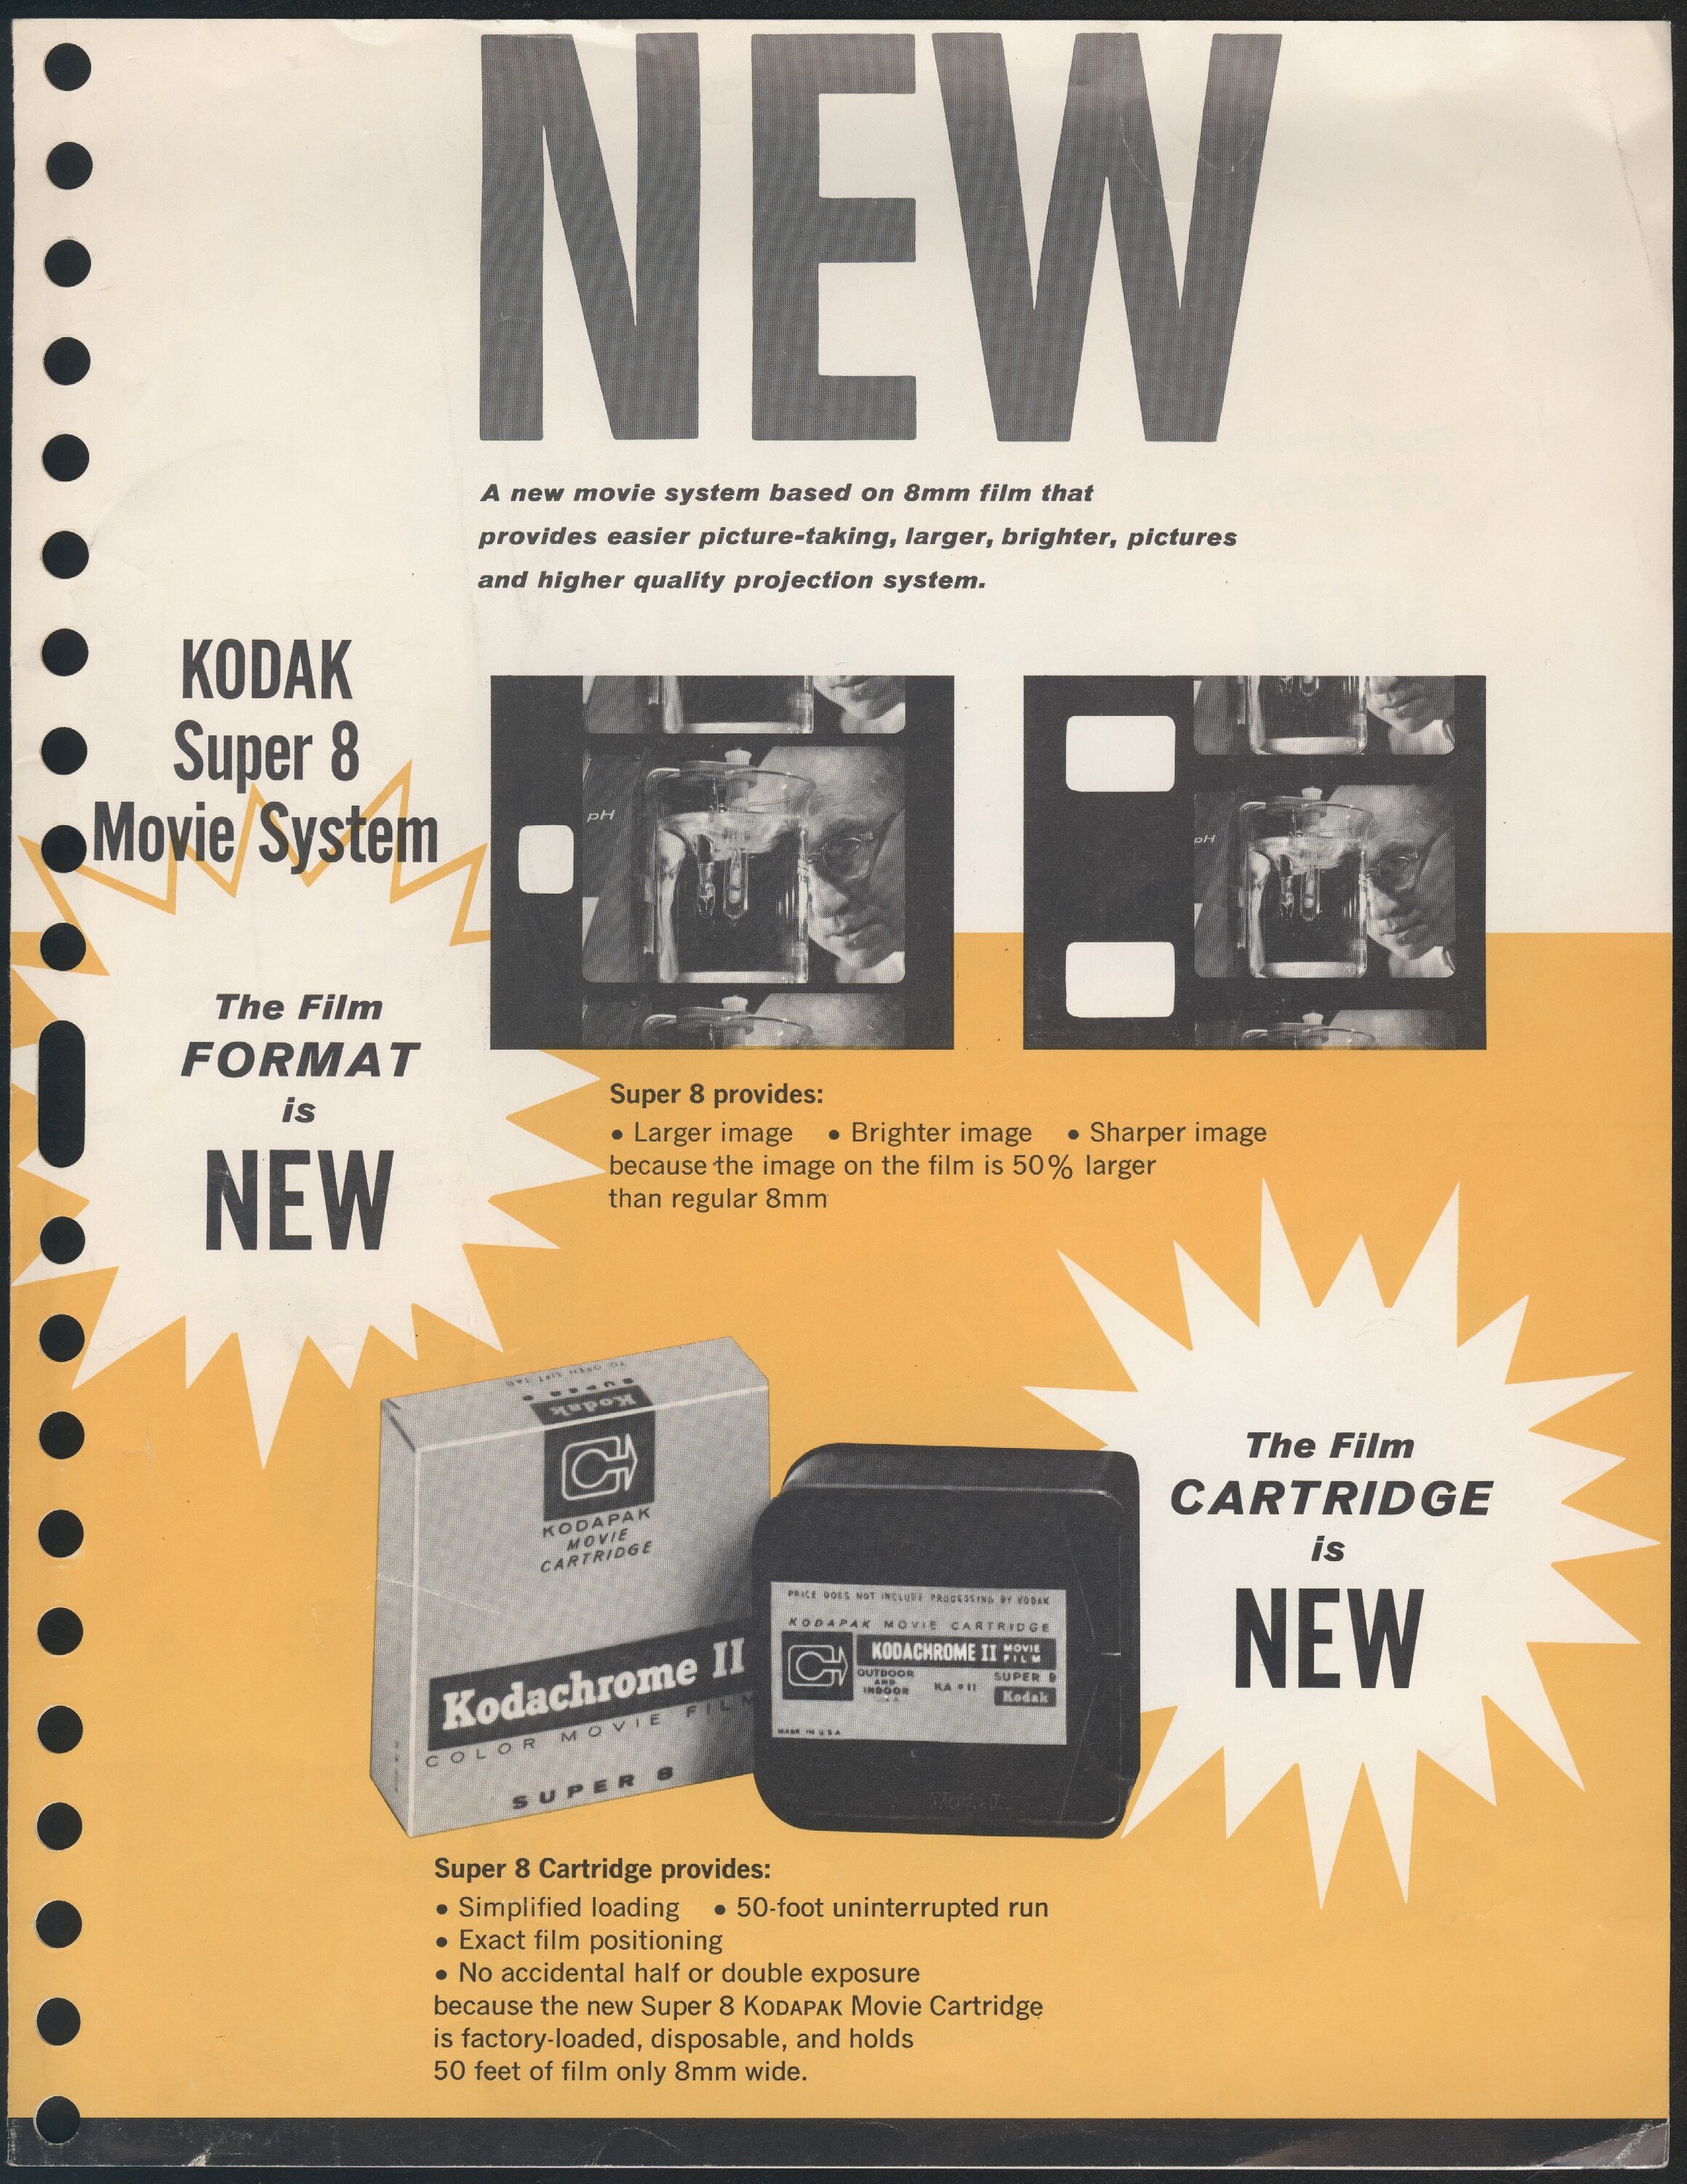 kodak - Has this cartridge of Super 8 film been used or not